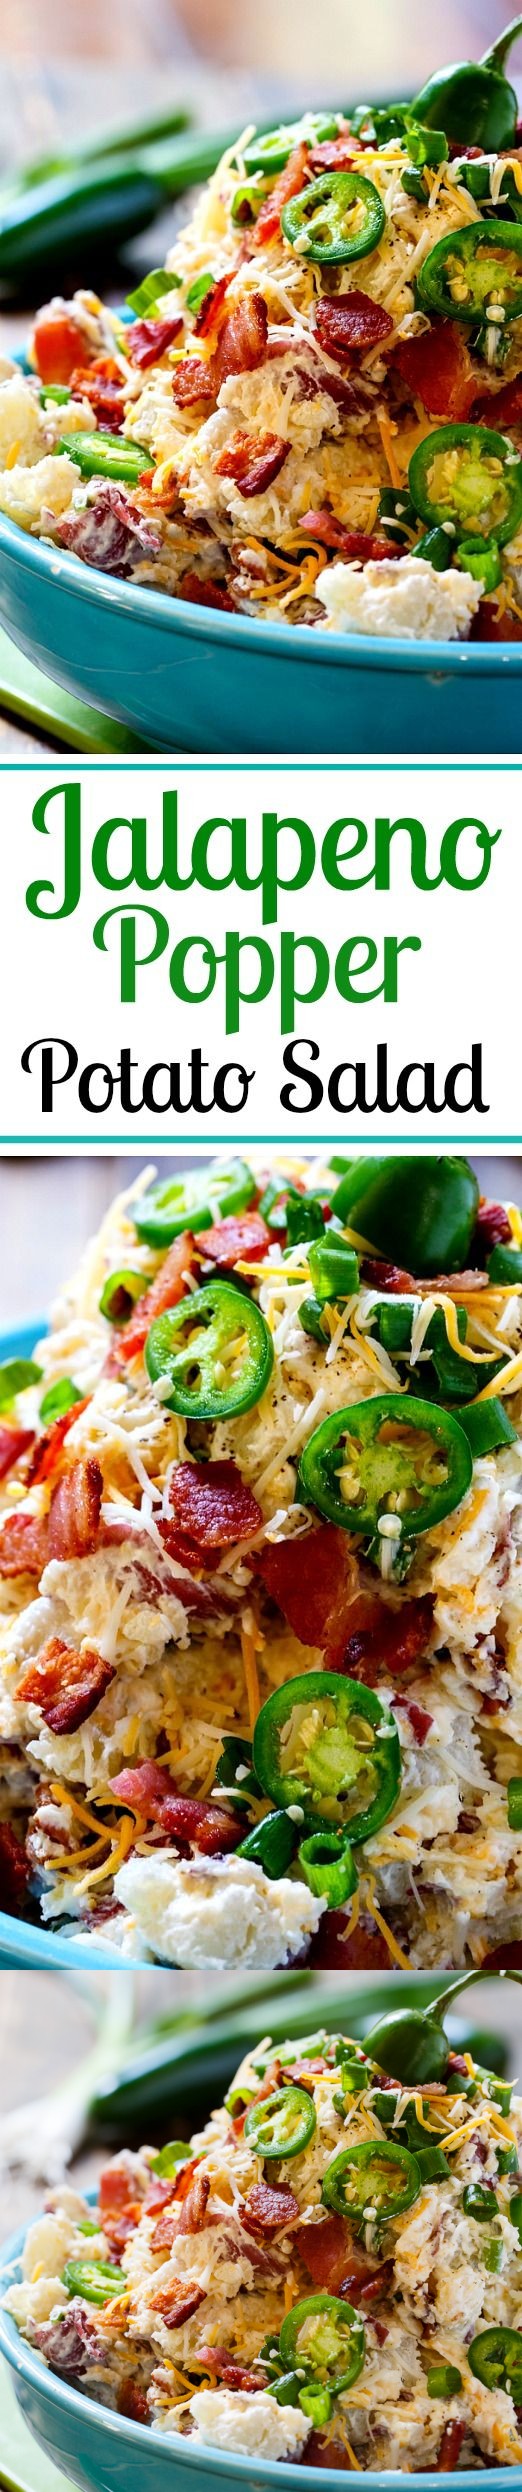 Jalapeno Popper Potato Salad